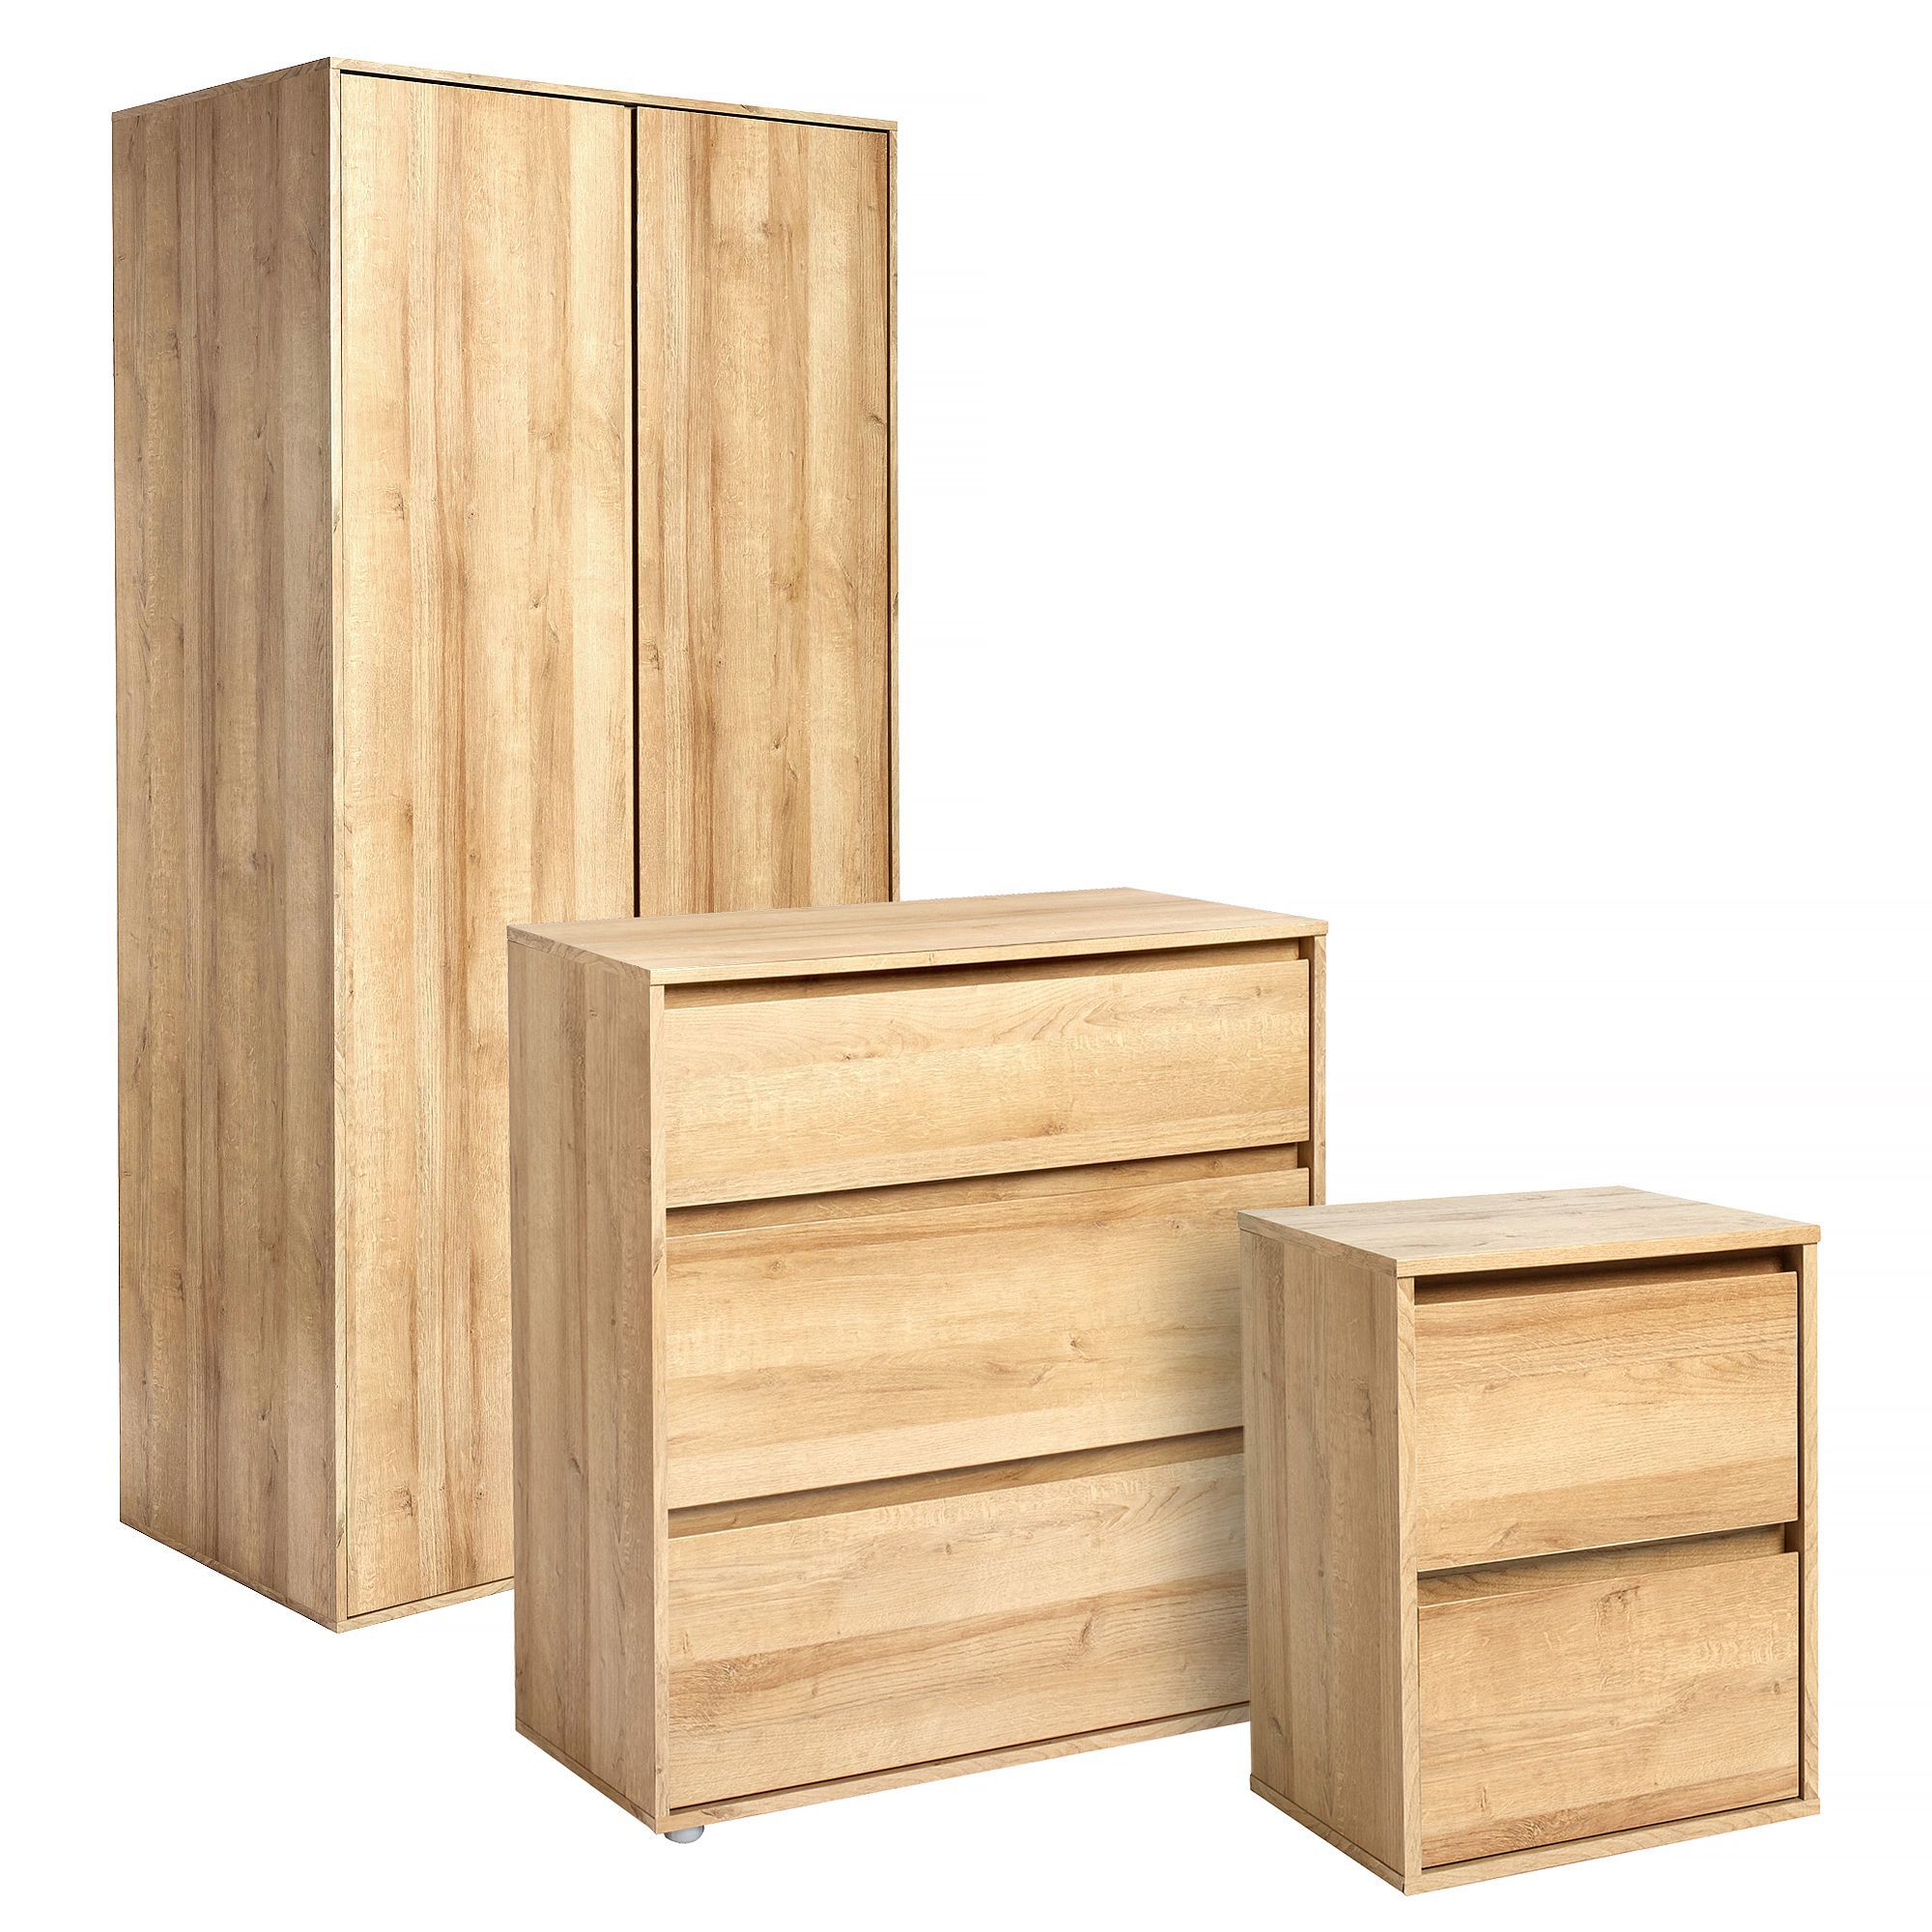 Pattinson Oak effect 3 piece bedroom furniture set